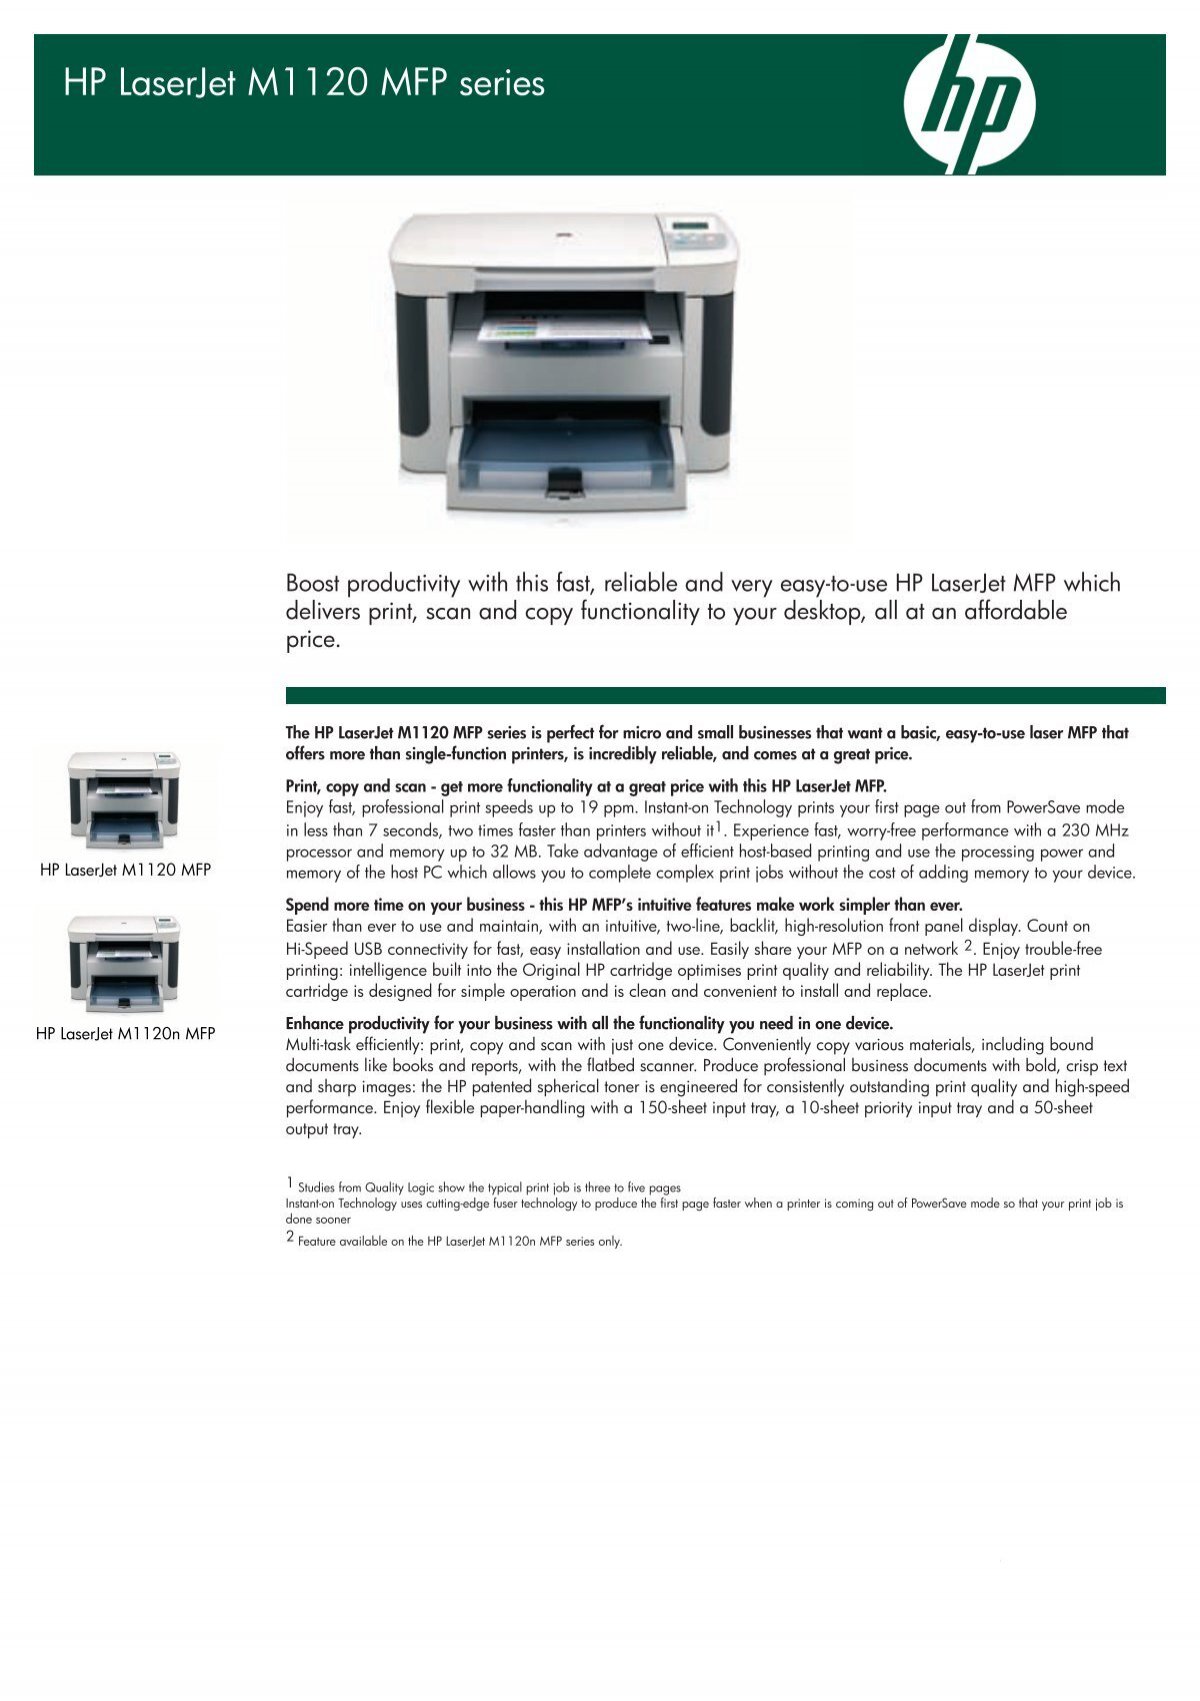 Hp Laserjet M1120 Mfp Brochure Office Printers